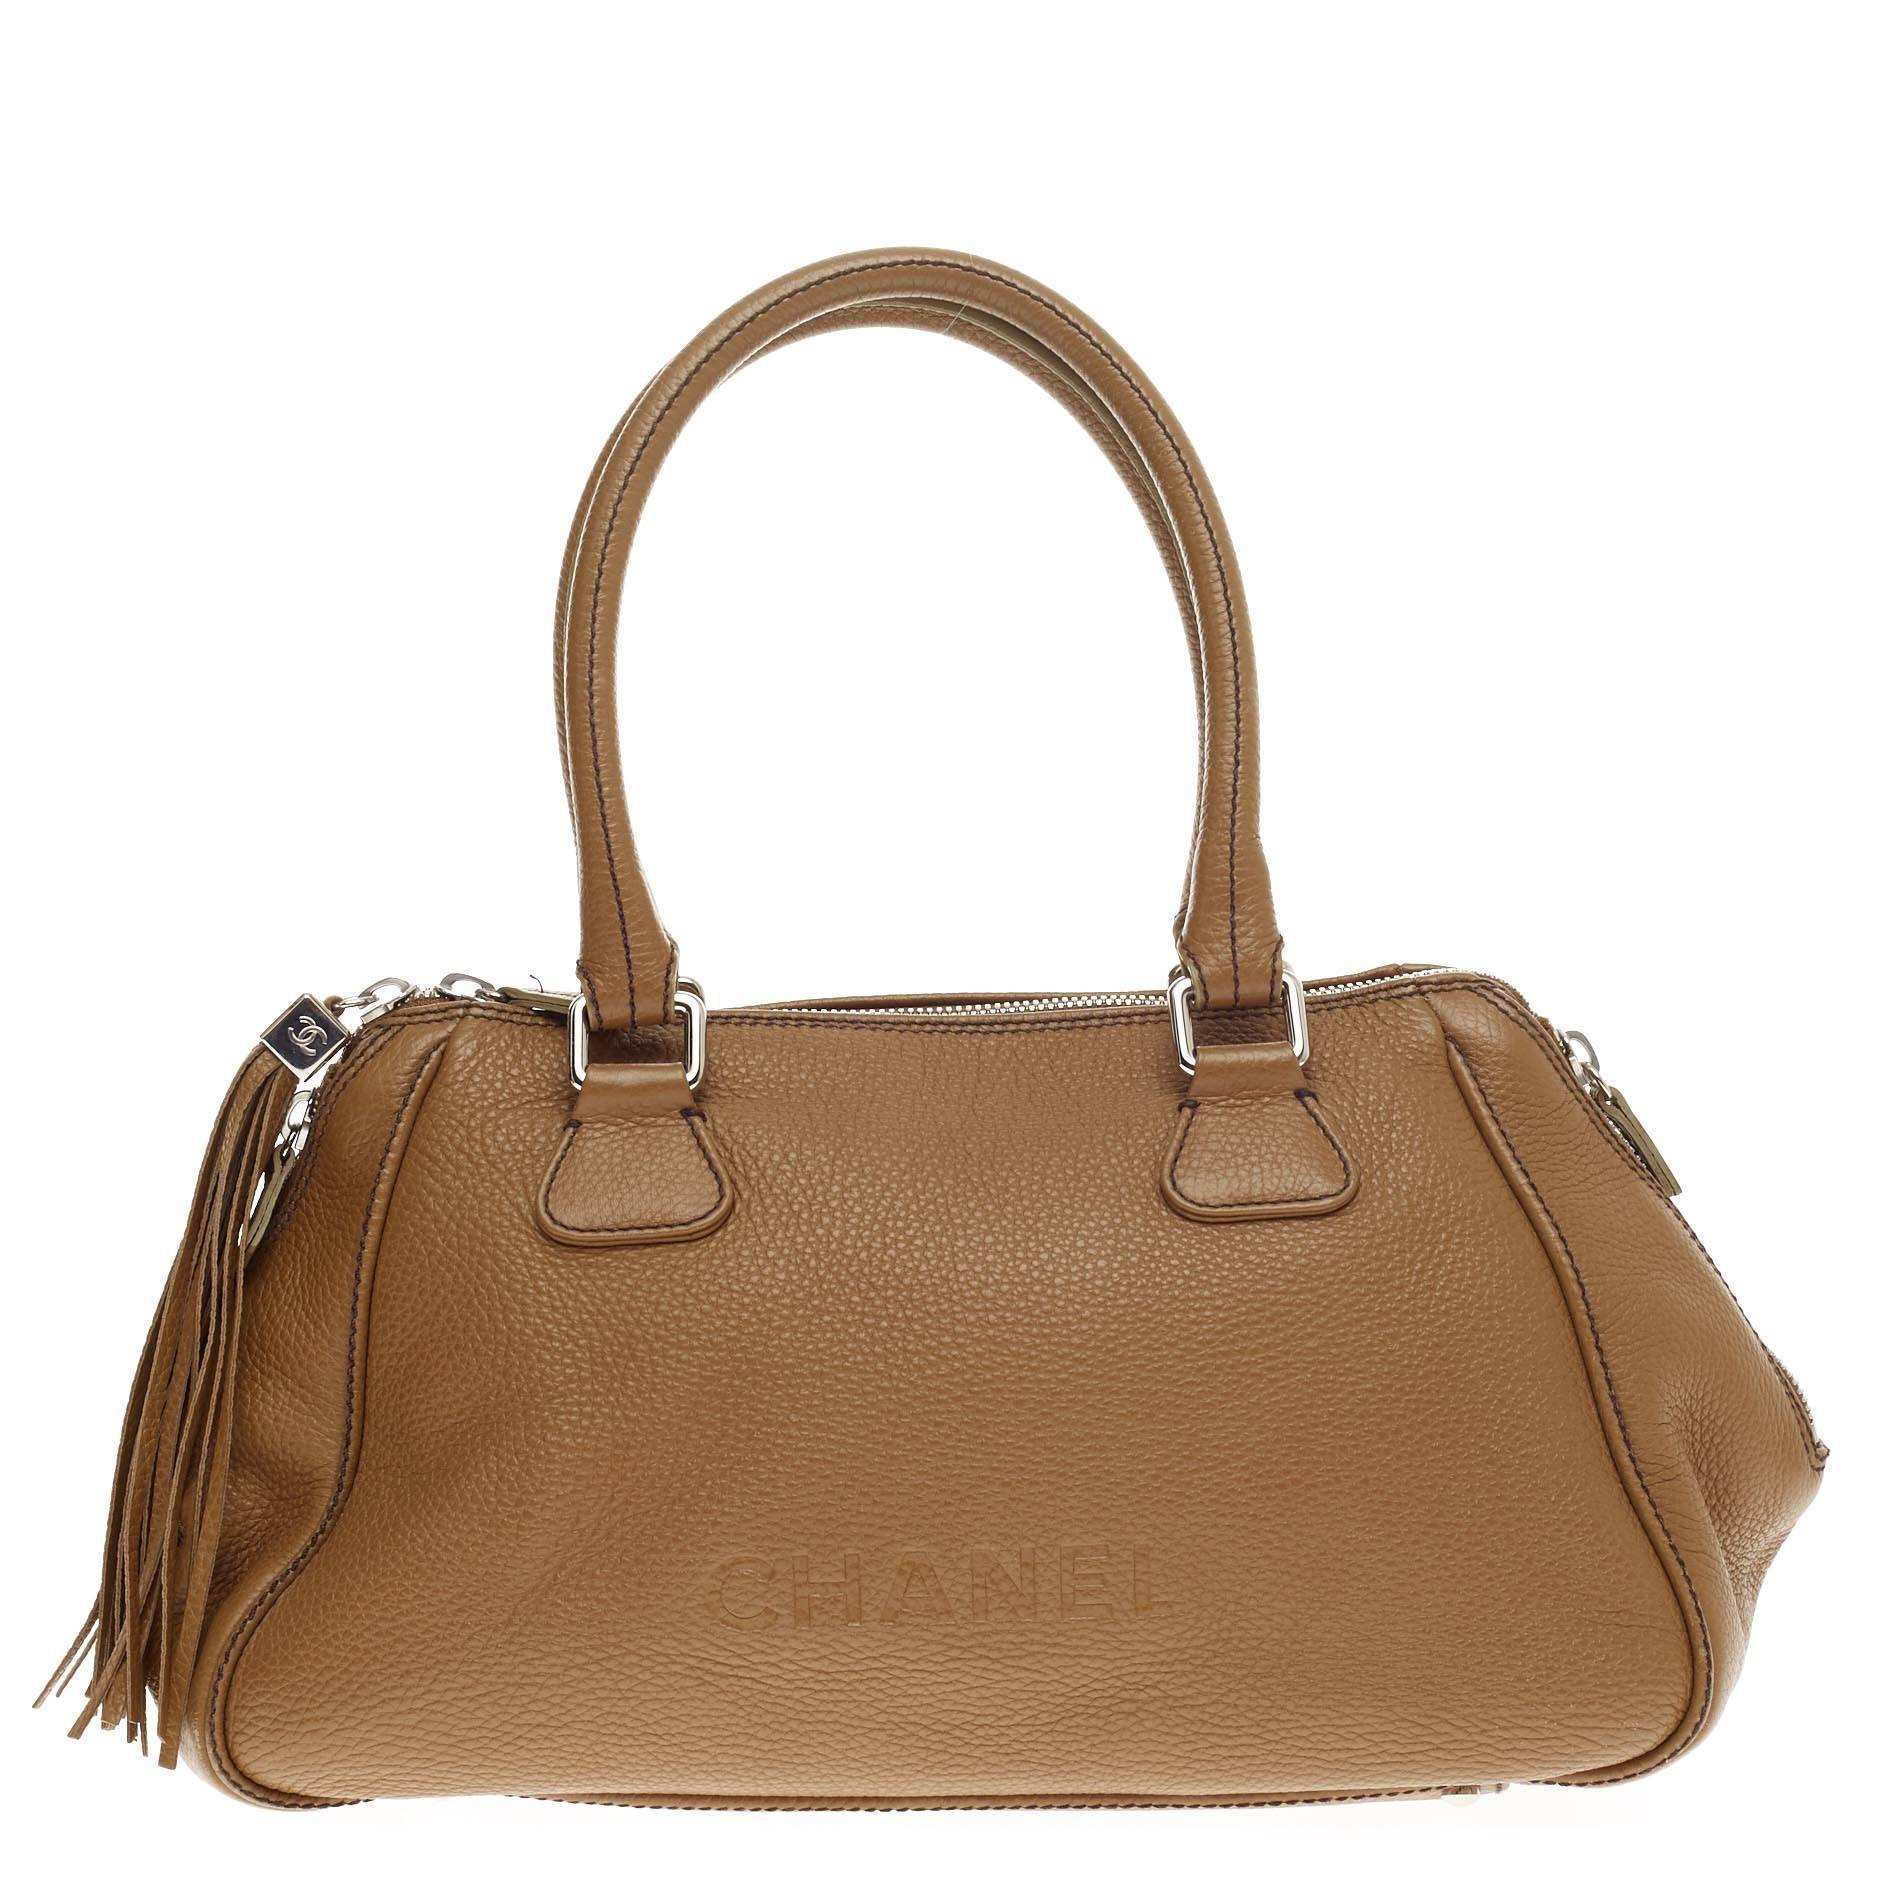 Chanel Lax Tassel Bag Pebbled Leather Large